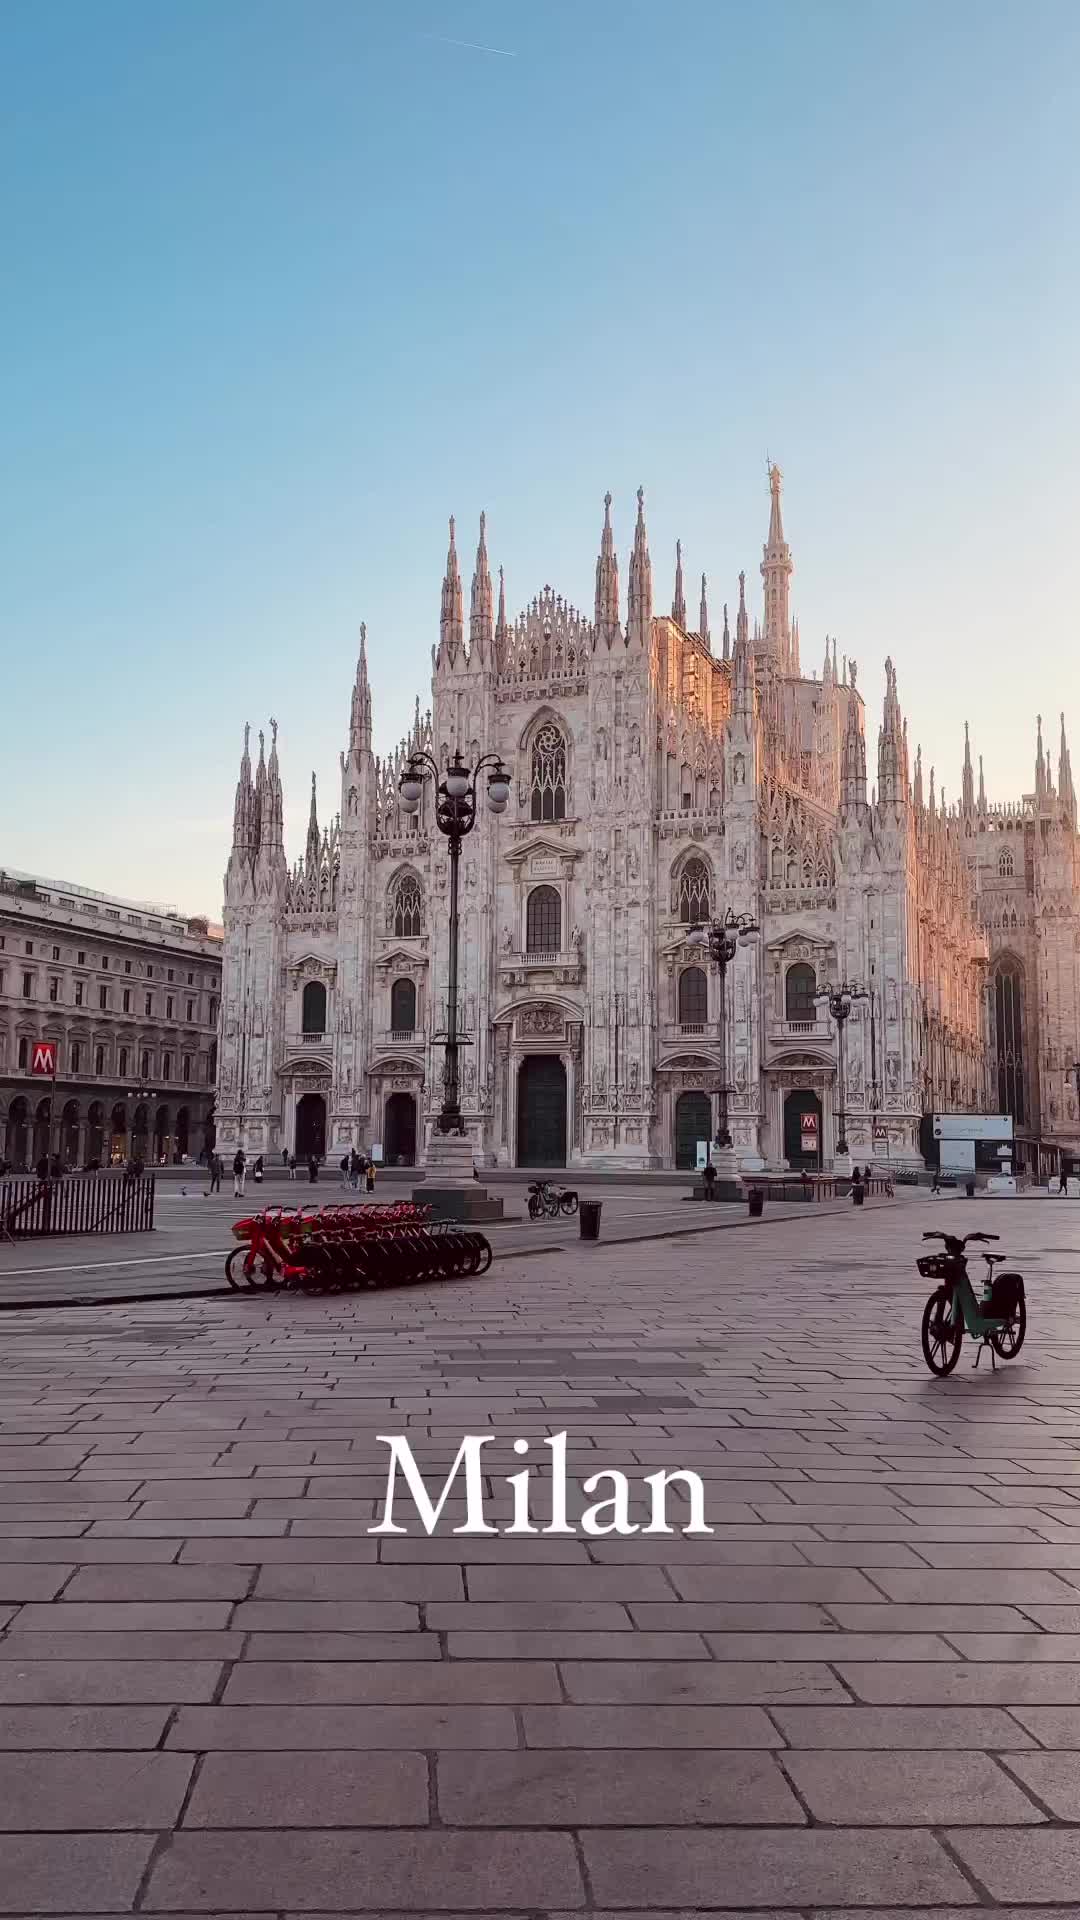 #Milan at dawn 🌅🧡

#milano #milanocity #italy #italia